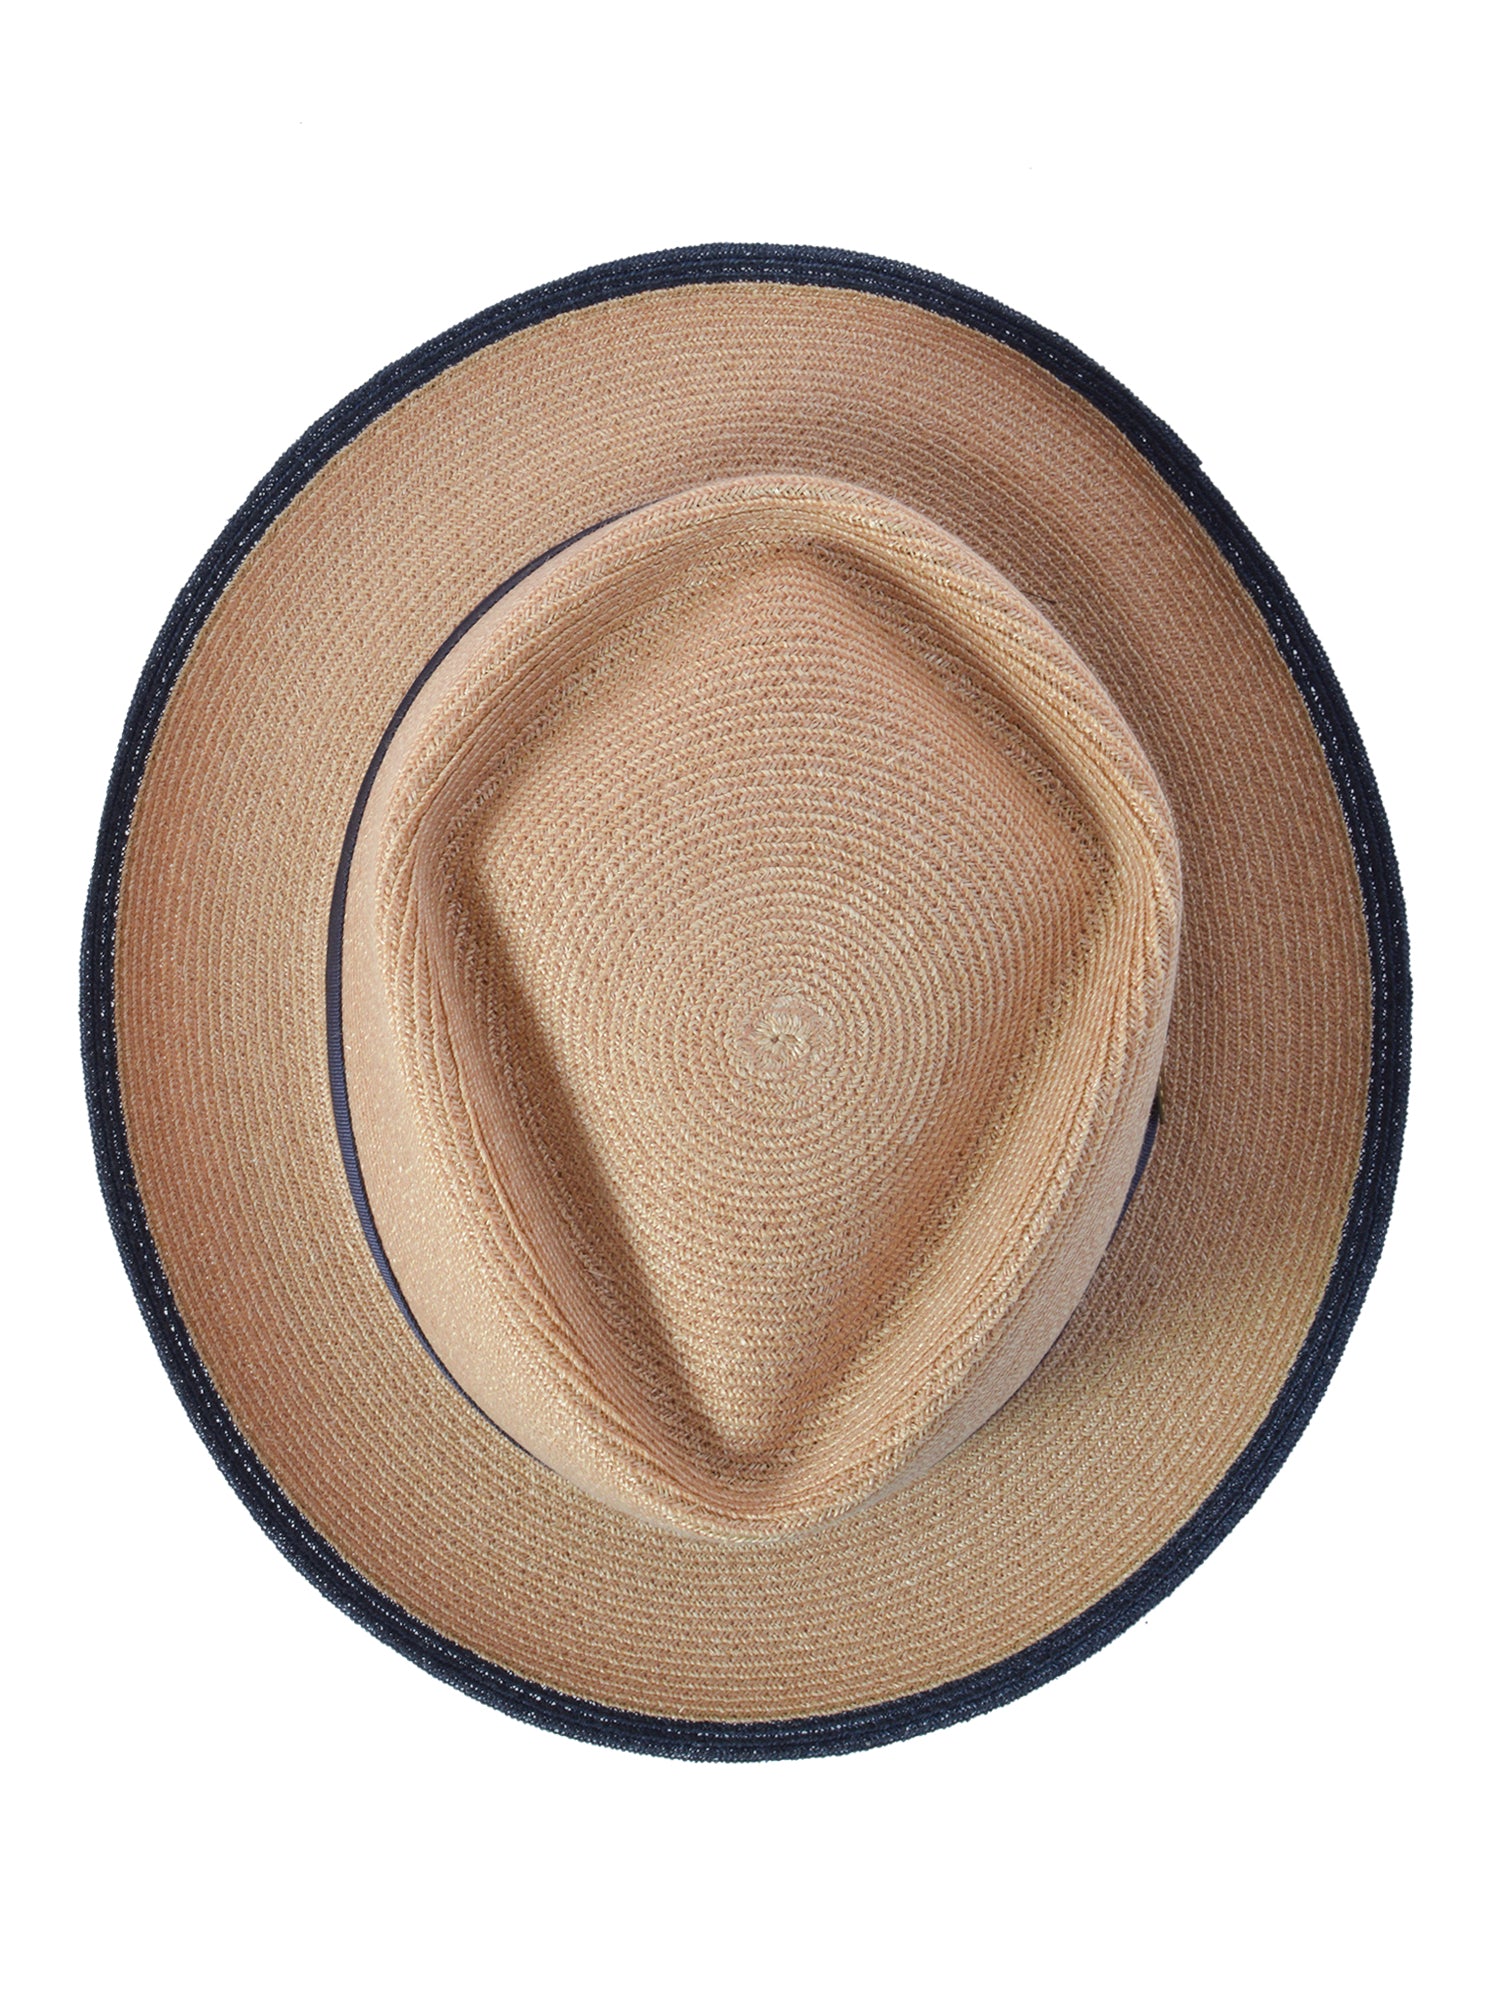 Dobbs The Lineup Hemp Straw Fedora Hat in Beige/Navy